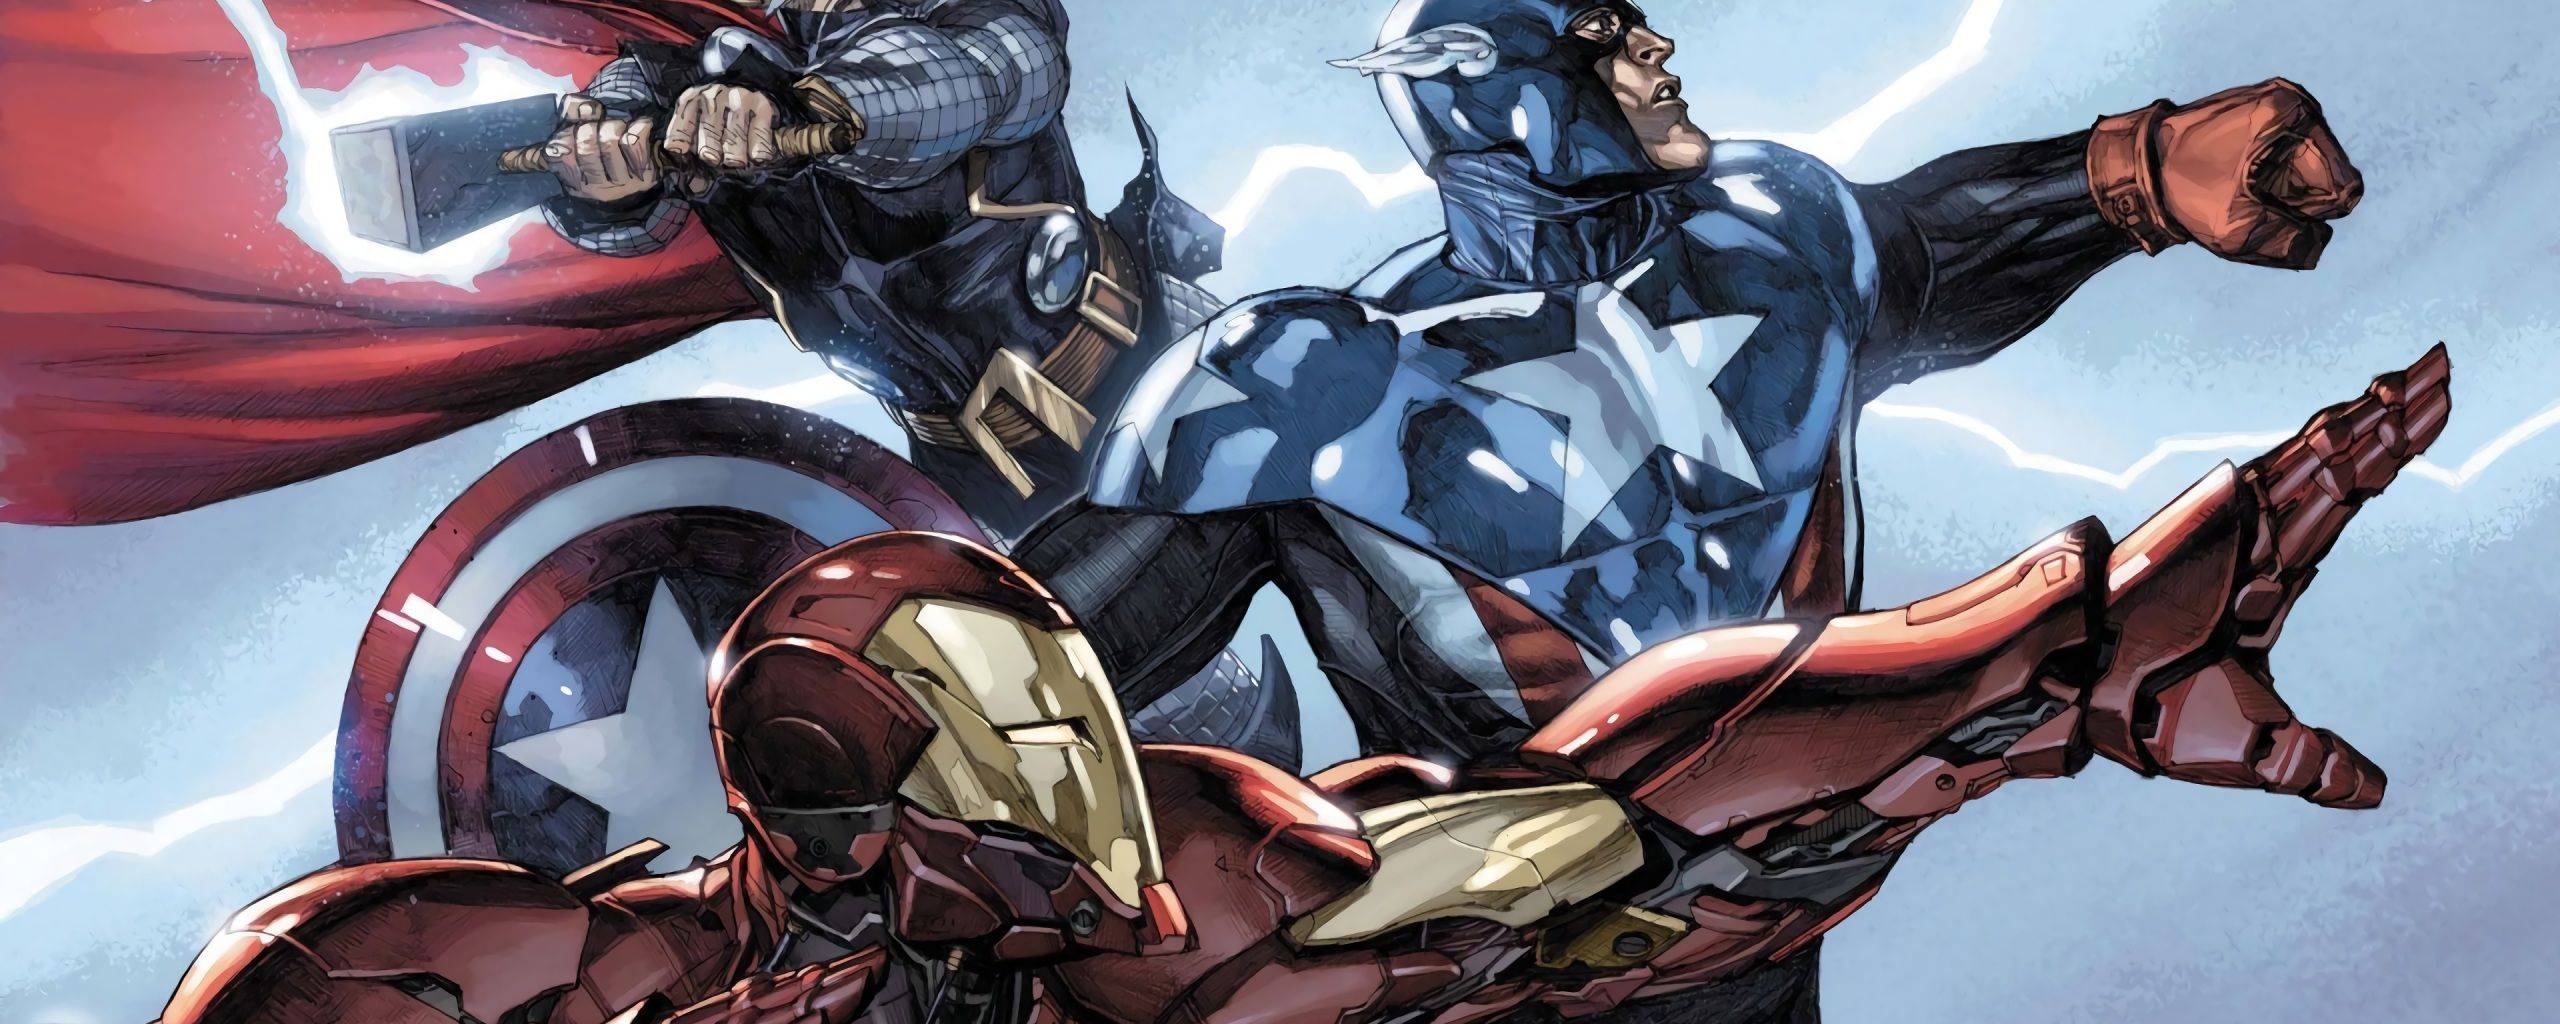 Wallpaper 4k Iron Man Captain America Thor Marvel Comics 4K Wallpaper captain america, Comics, Iron Man, Marvel Comics, Thor